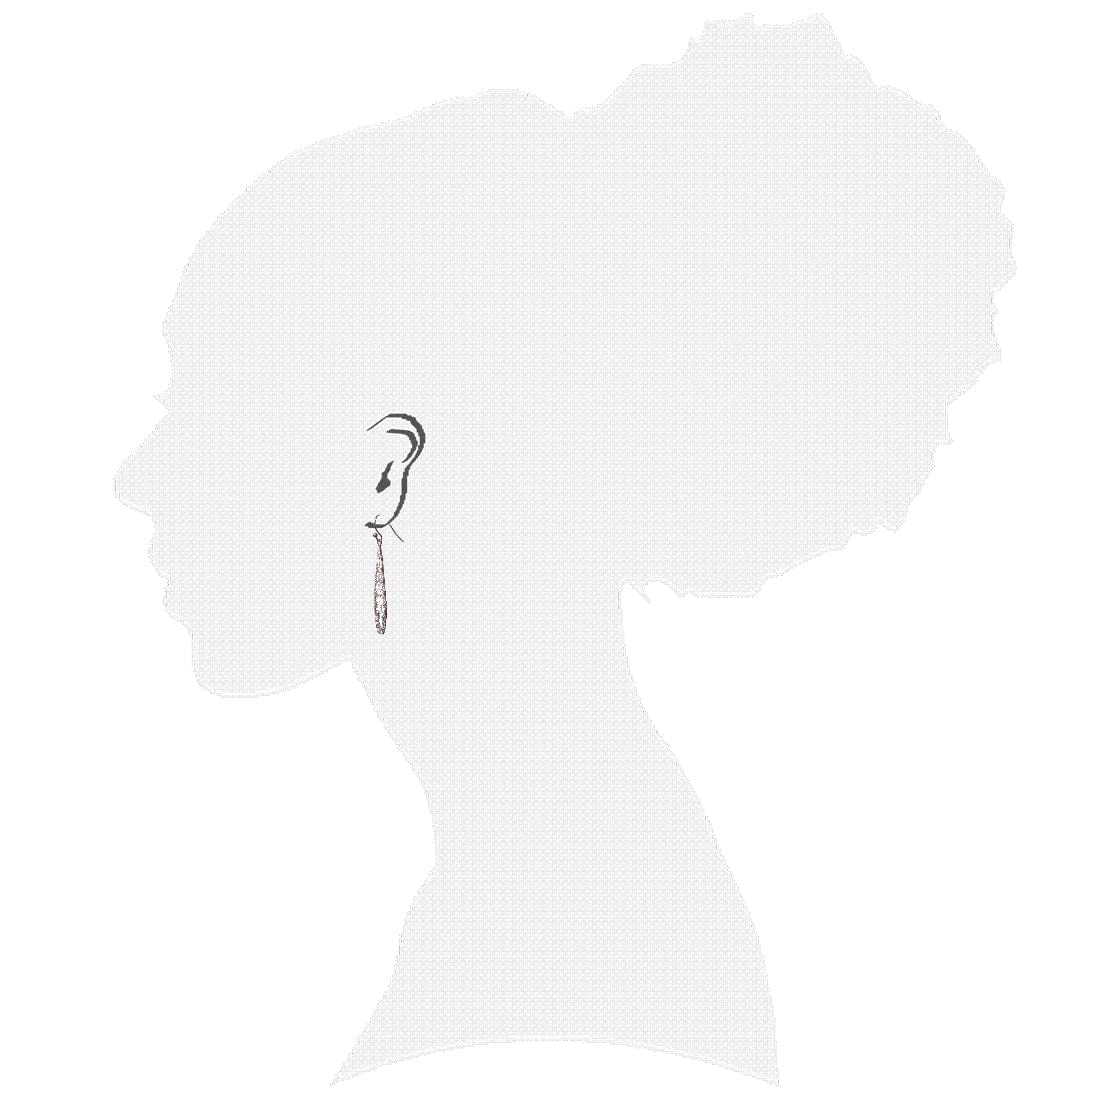 Shop Boho Minimalist Hand Hammered Feather Bar Drop Dangle Silver Earrings, Earrings, USA Boutique